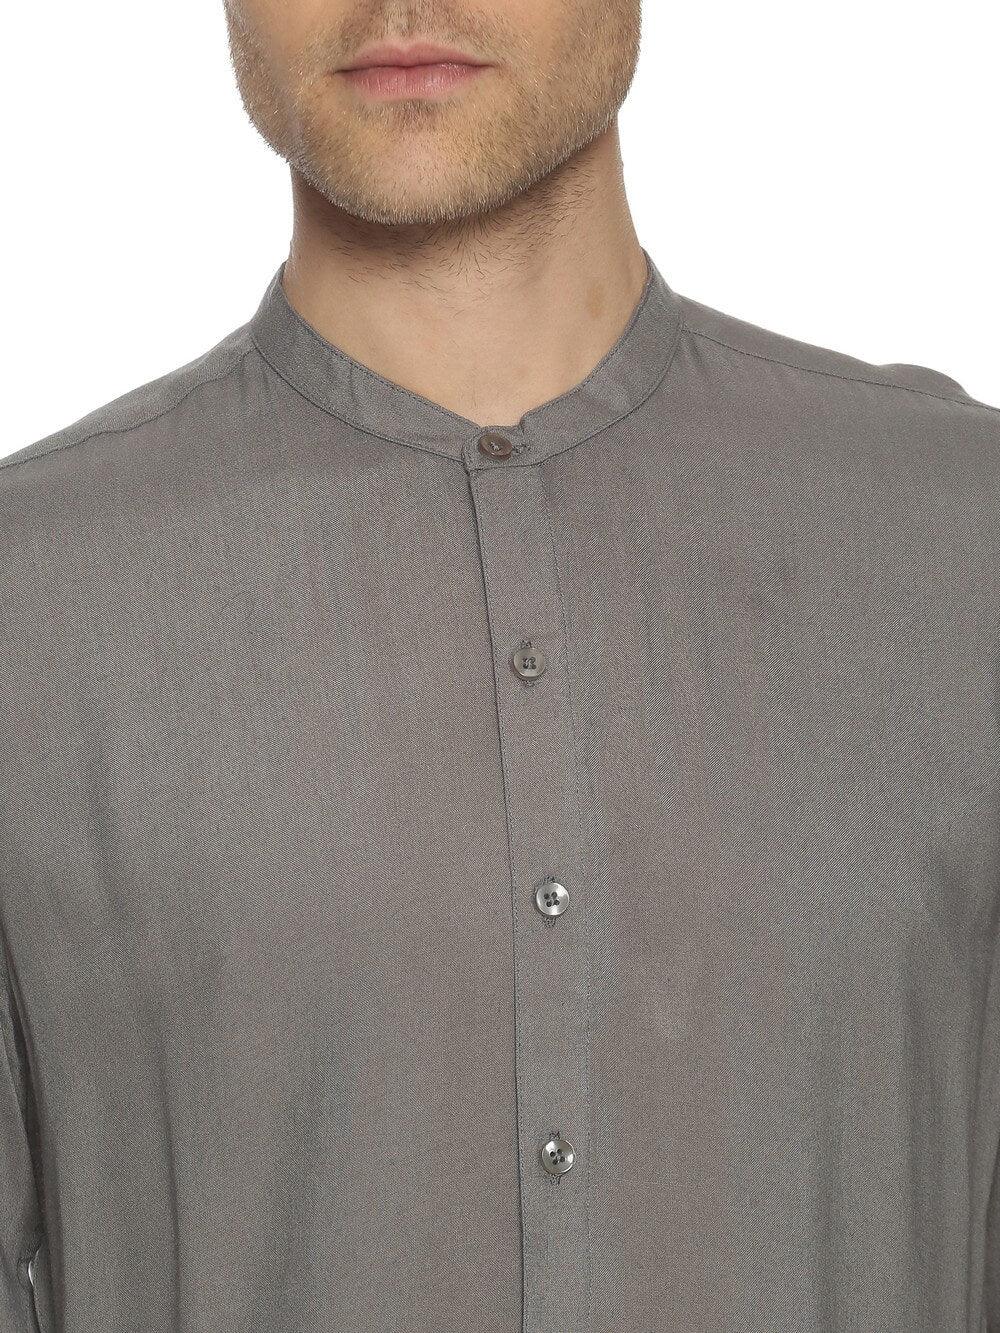 Rayon Gray Ultra Soft Skinny Fit Full Sleeve Shirt WeaversKnot 